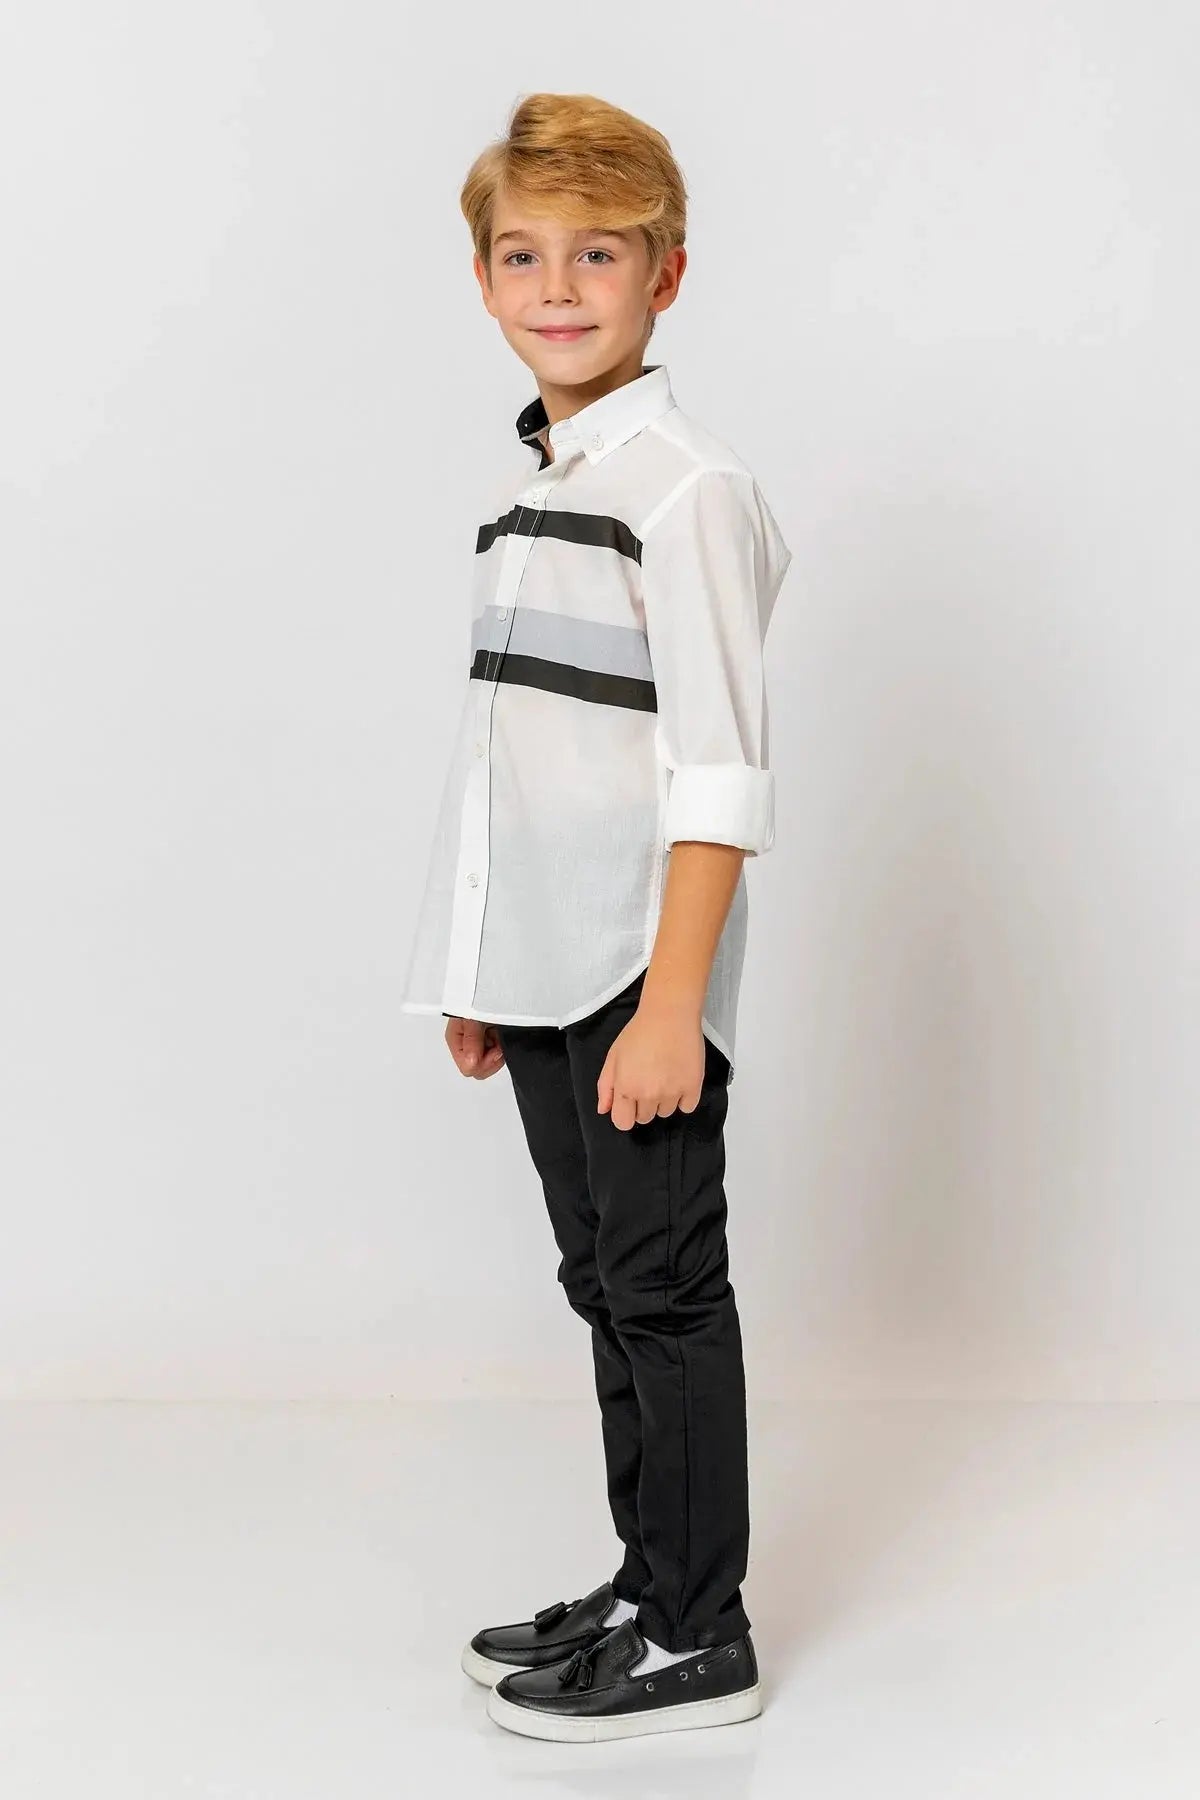 InCity Boys (3083) - Kids Collared Striped Long Sleeve Dress Shirt dogan-811